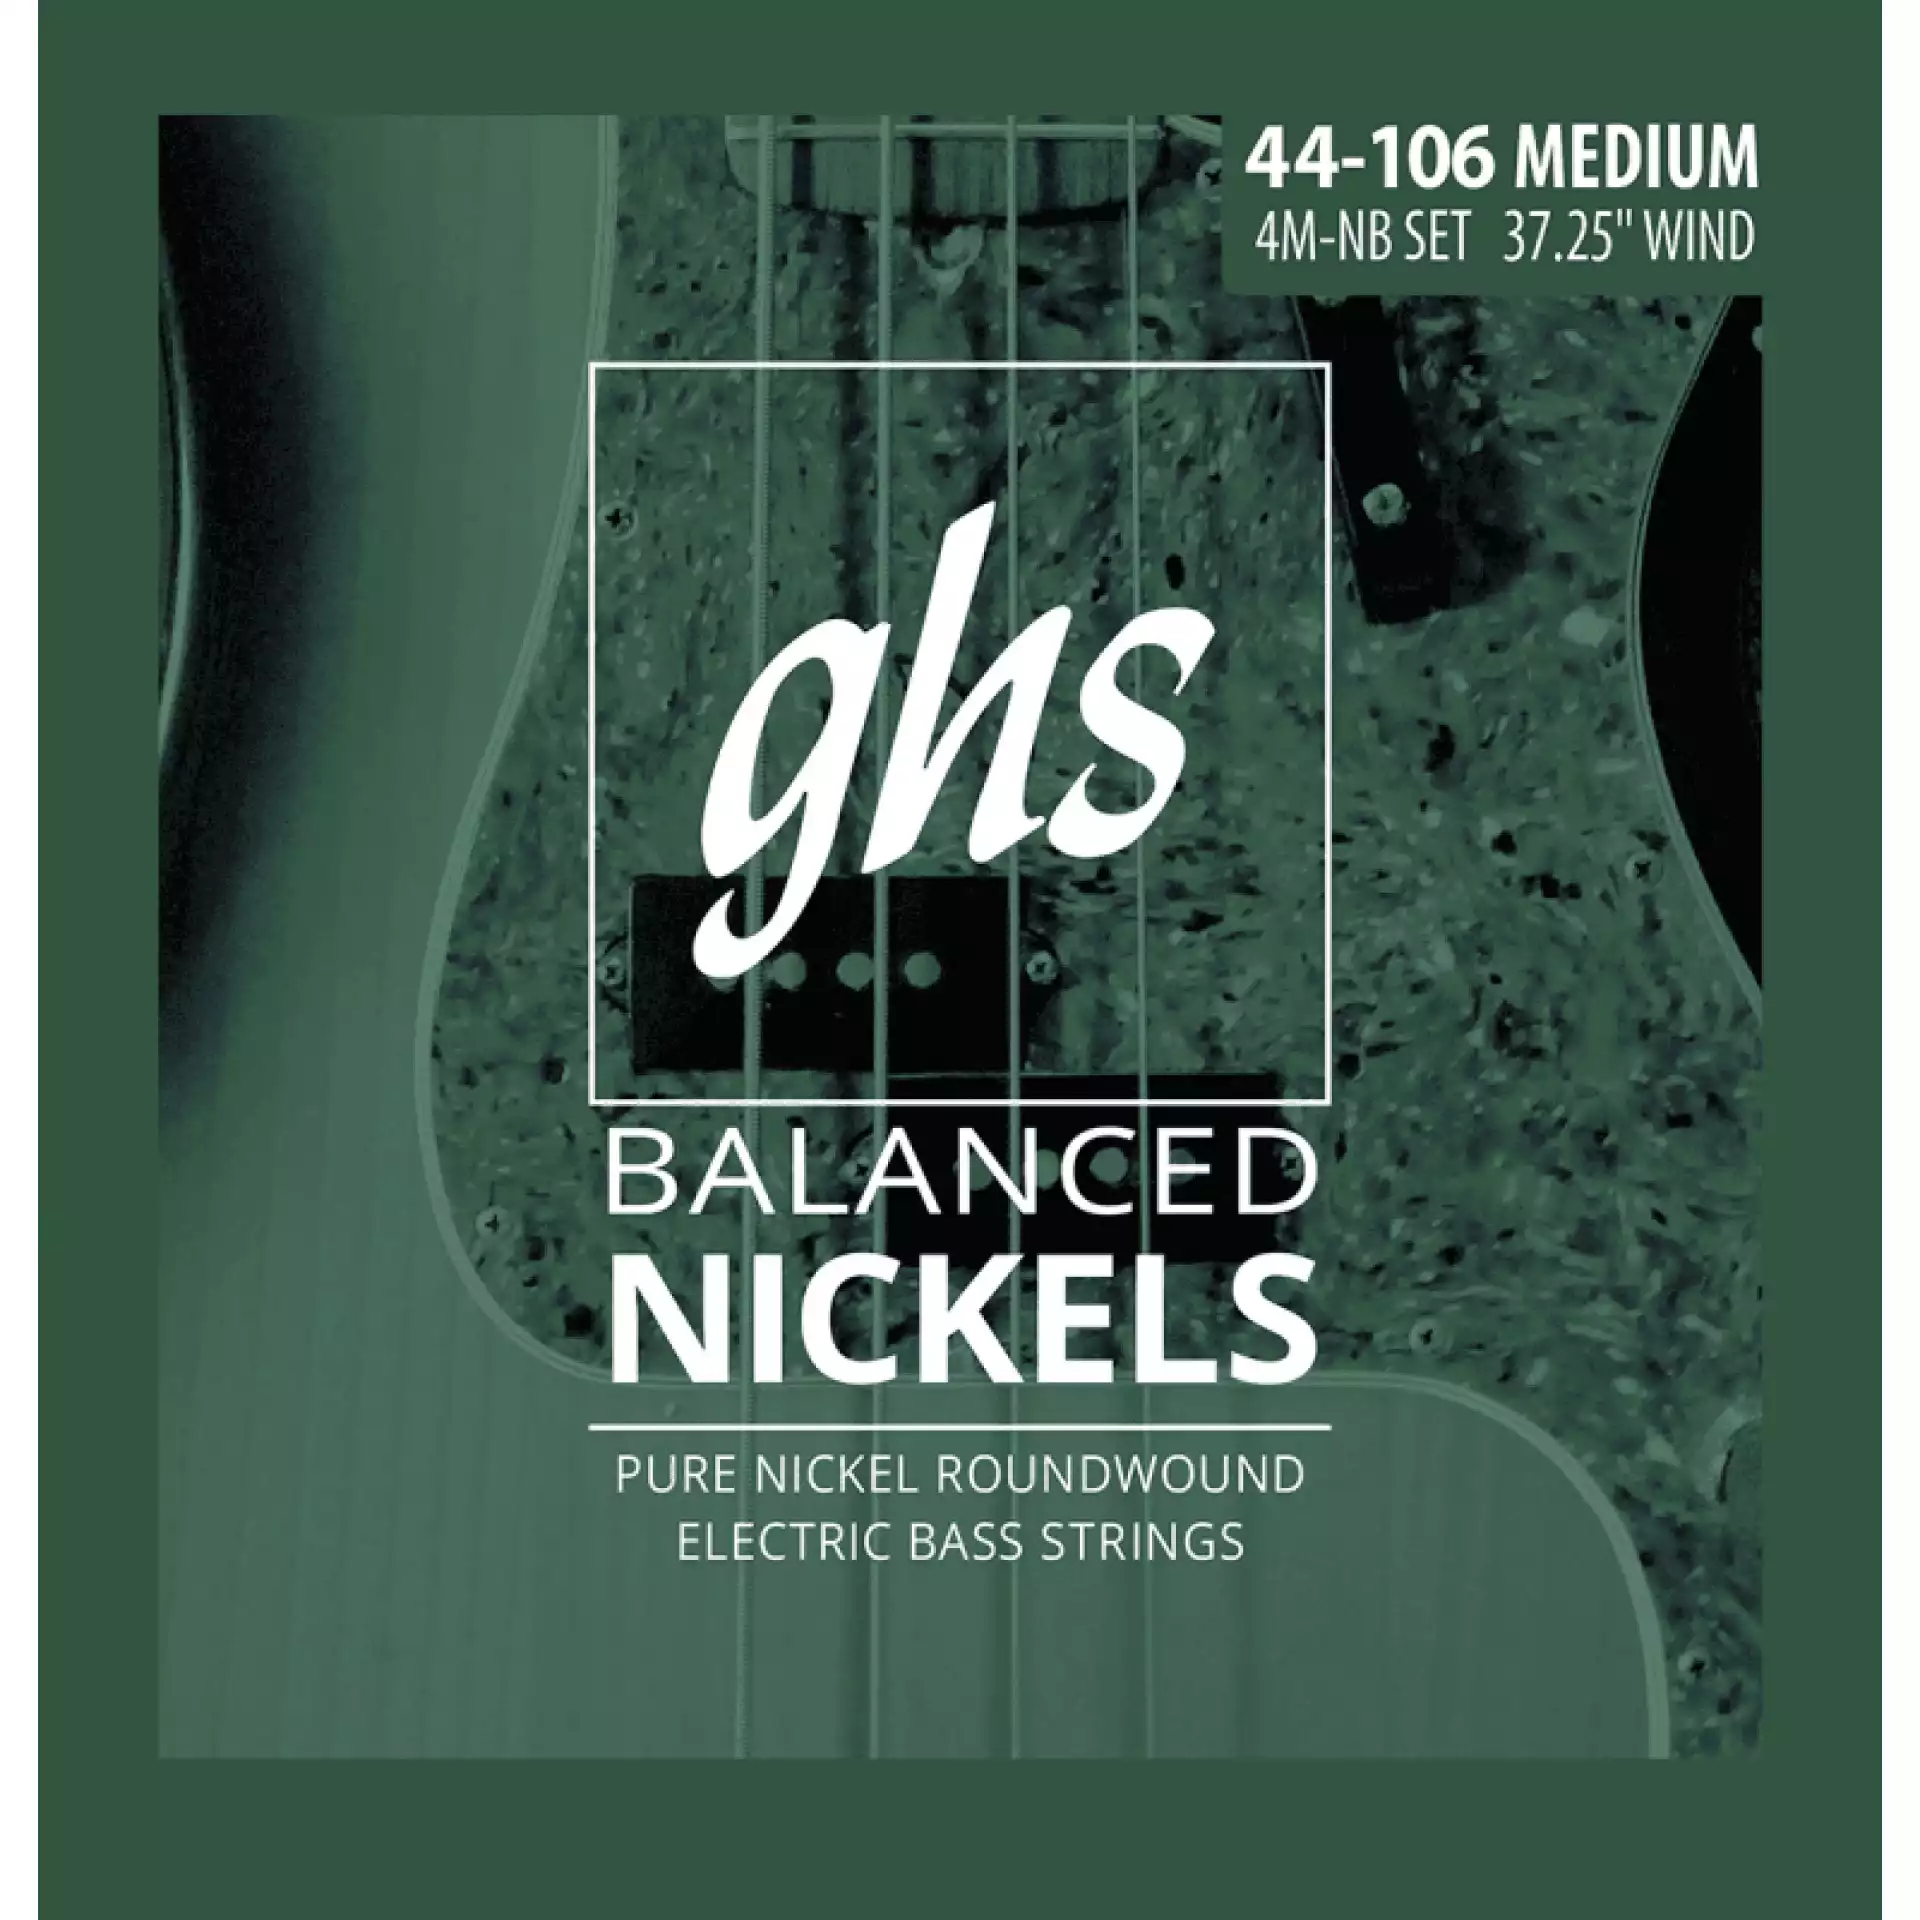 GHS 4M-NB Balanced Nickel Medium 44-106